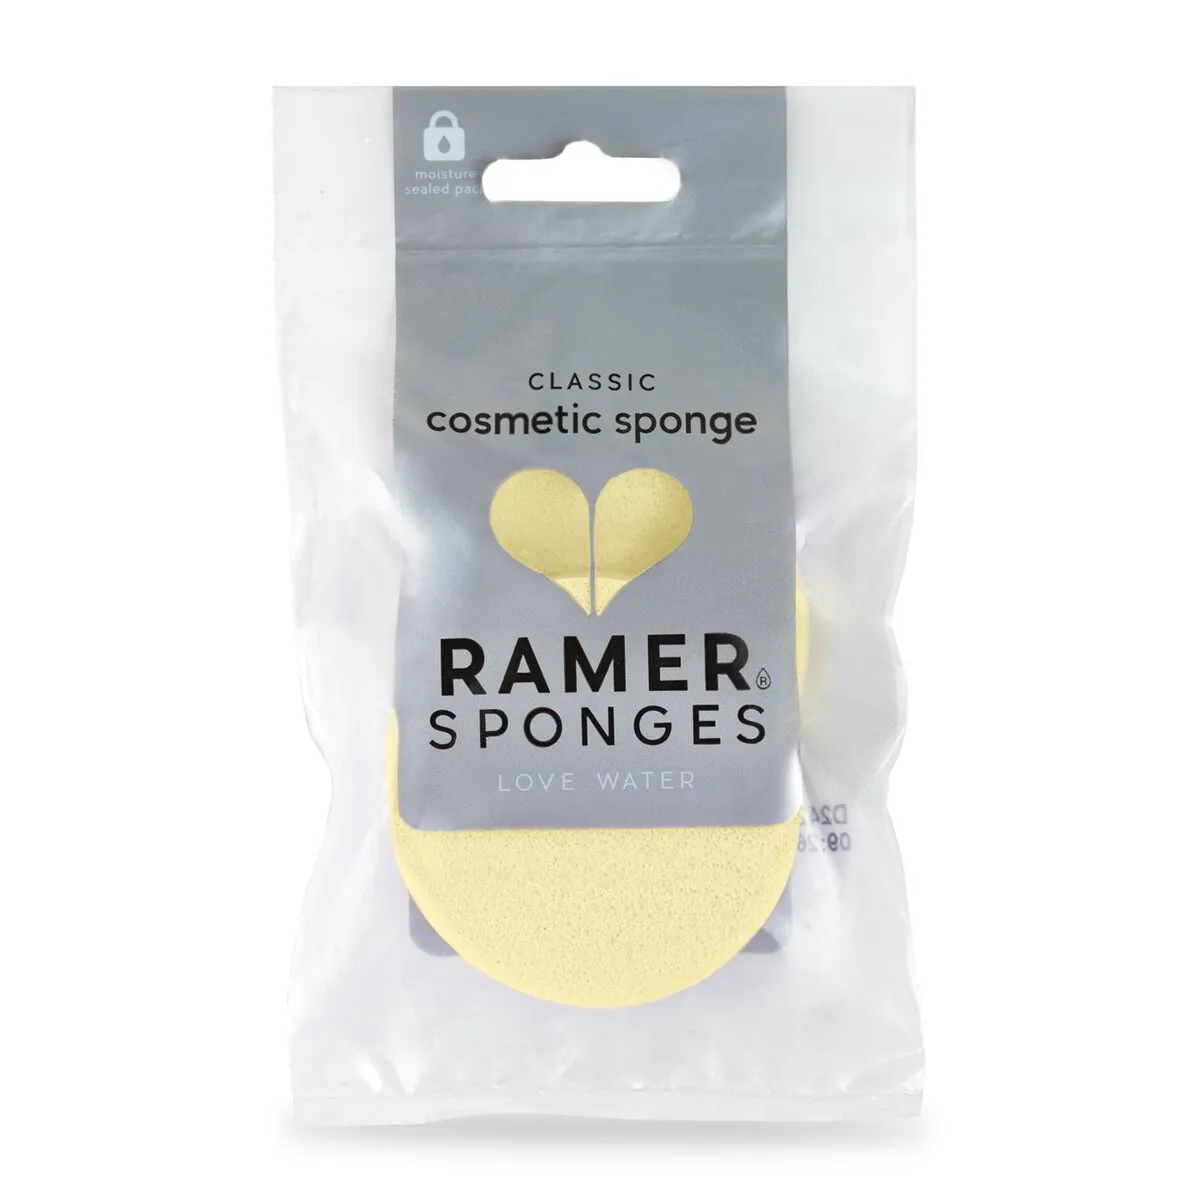 Ramer Ultra Soft Baby Sponge Twinpack 2 per pack